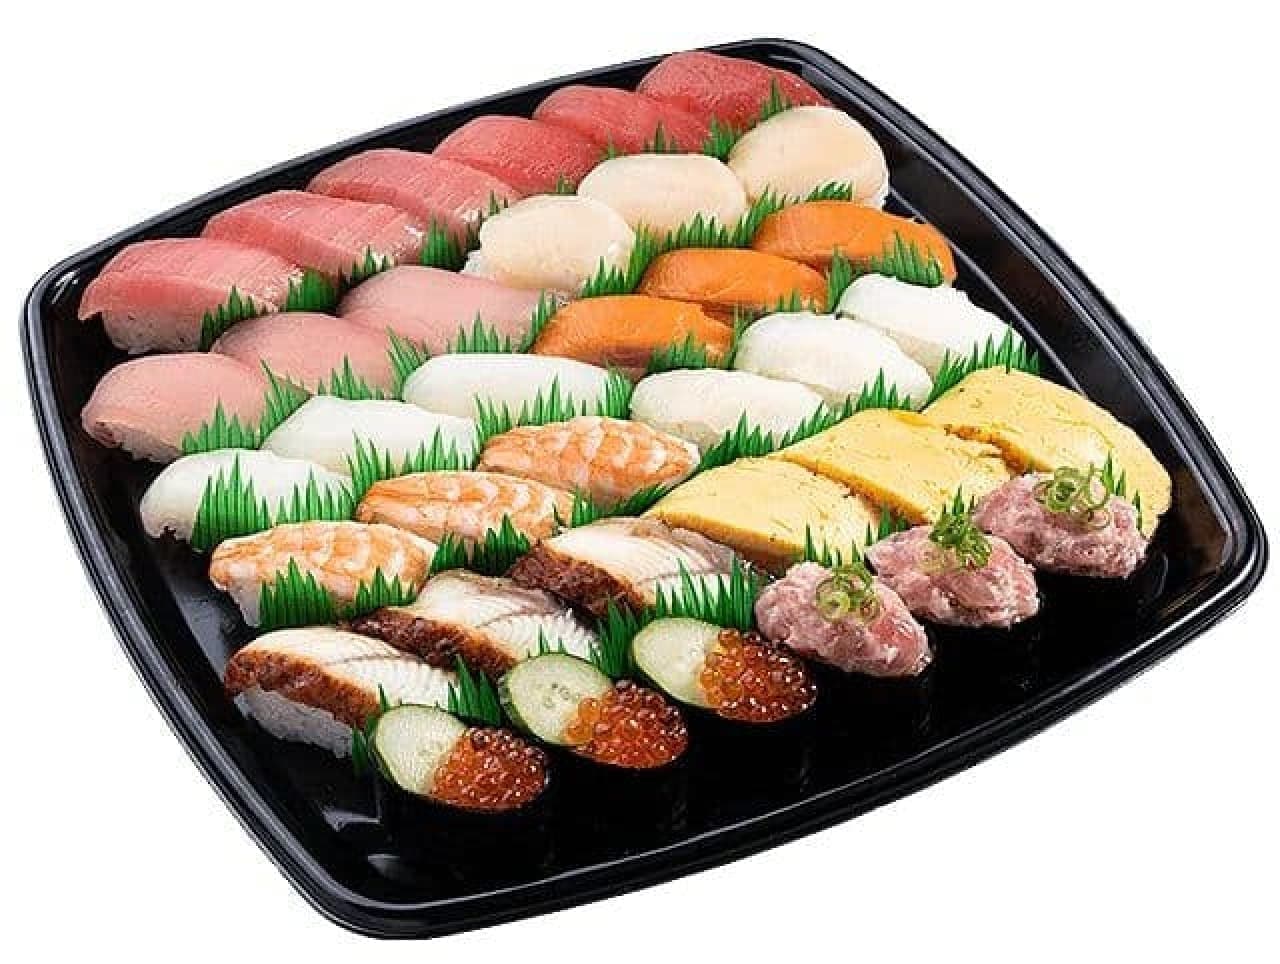 Kappa Sushi "Satisfaction Set" for 3